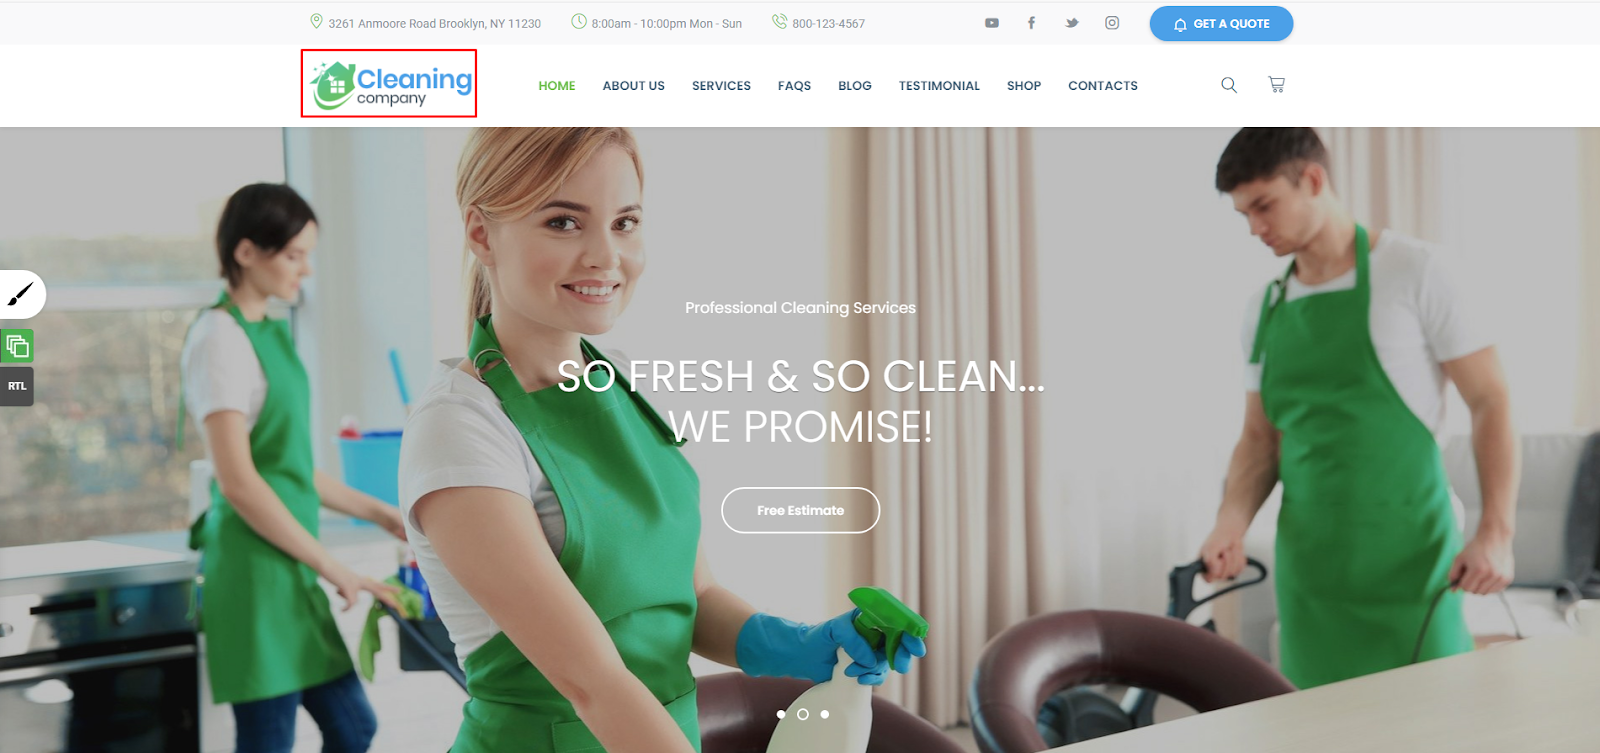 Cleaning Service - Responsive  WordPress theme